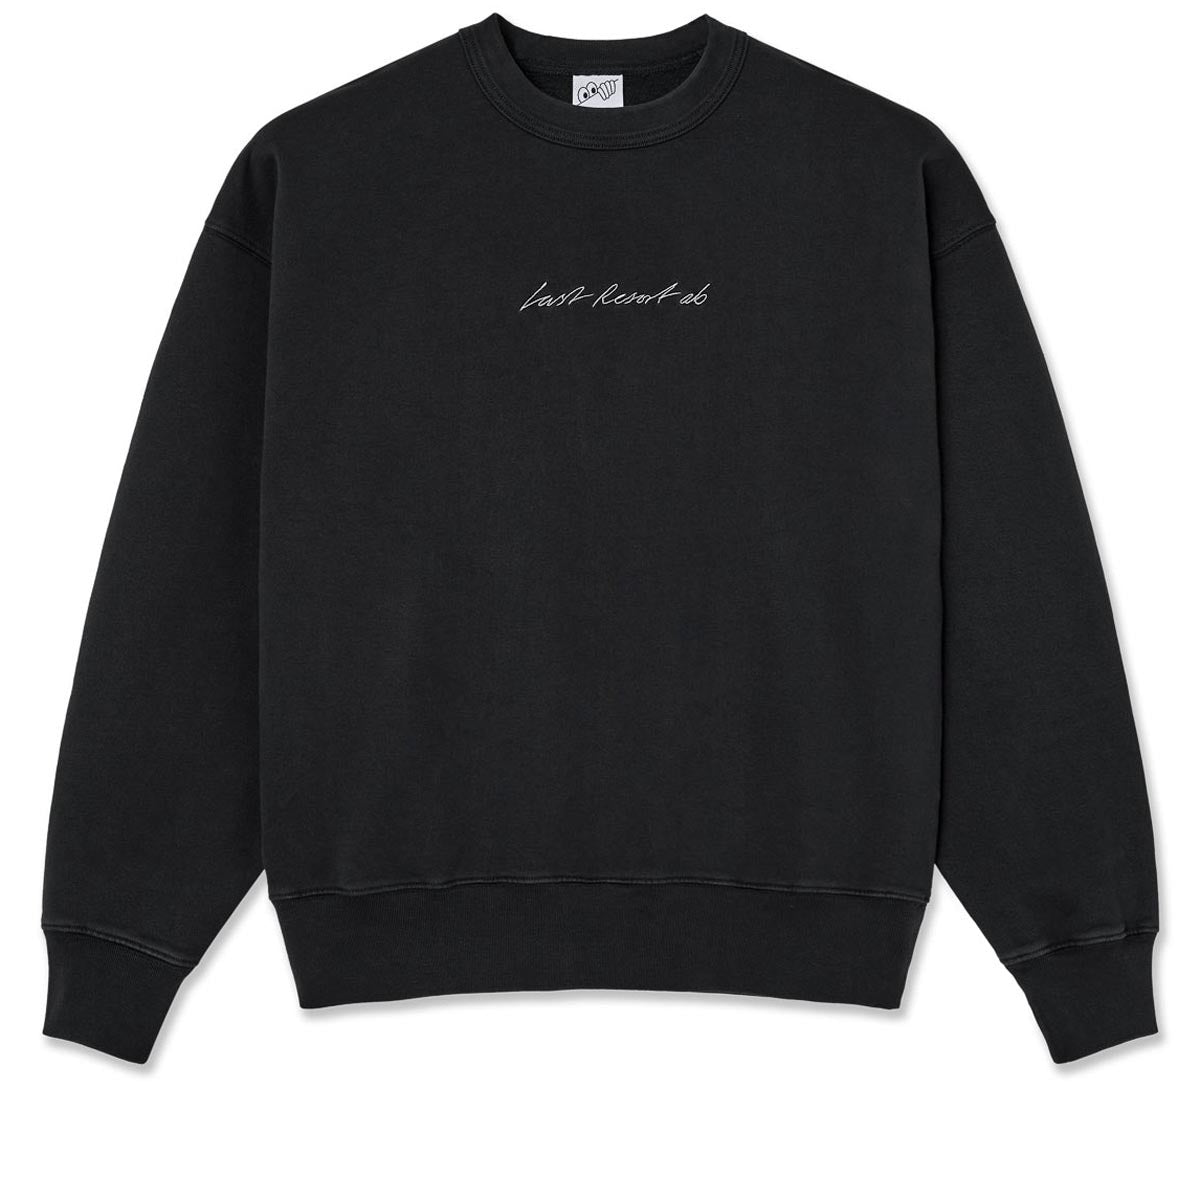 Last Resort AB LR Signature Sweater - Washed Black image 1